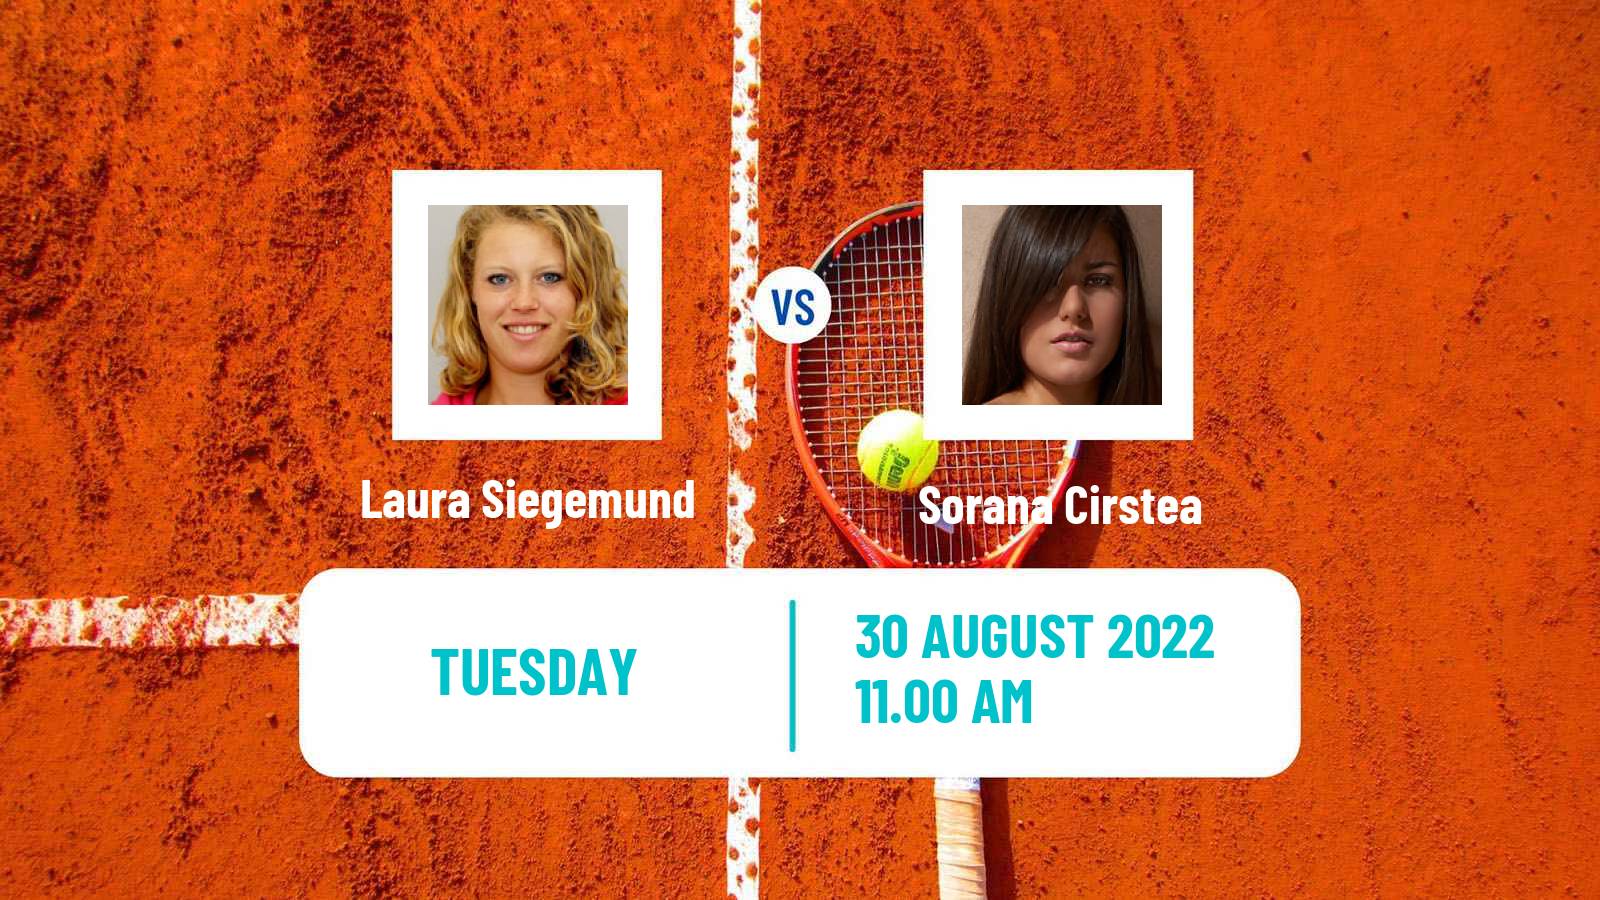 Tennis WTA US Open Laura Siegemund - Sorana Cirstea